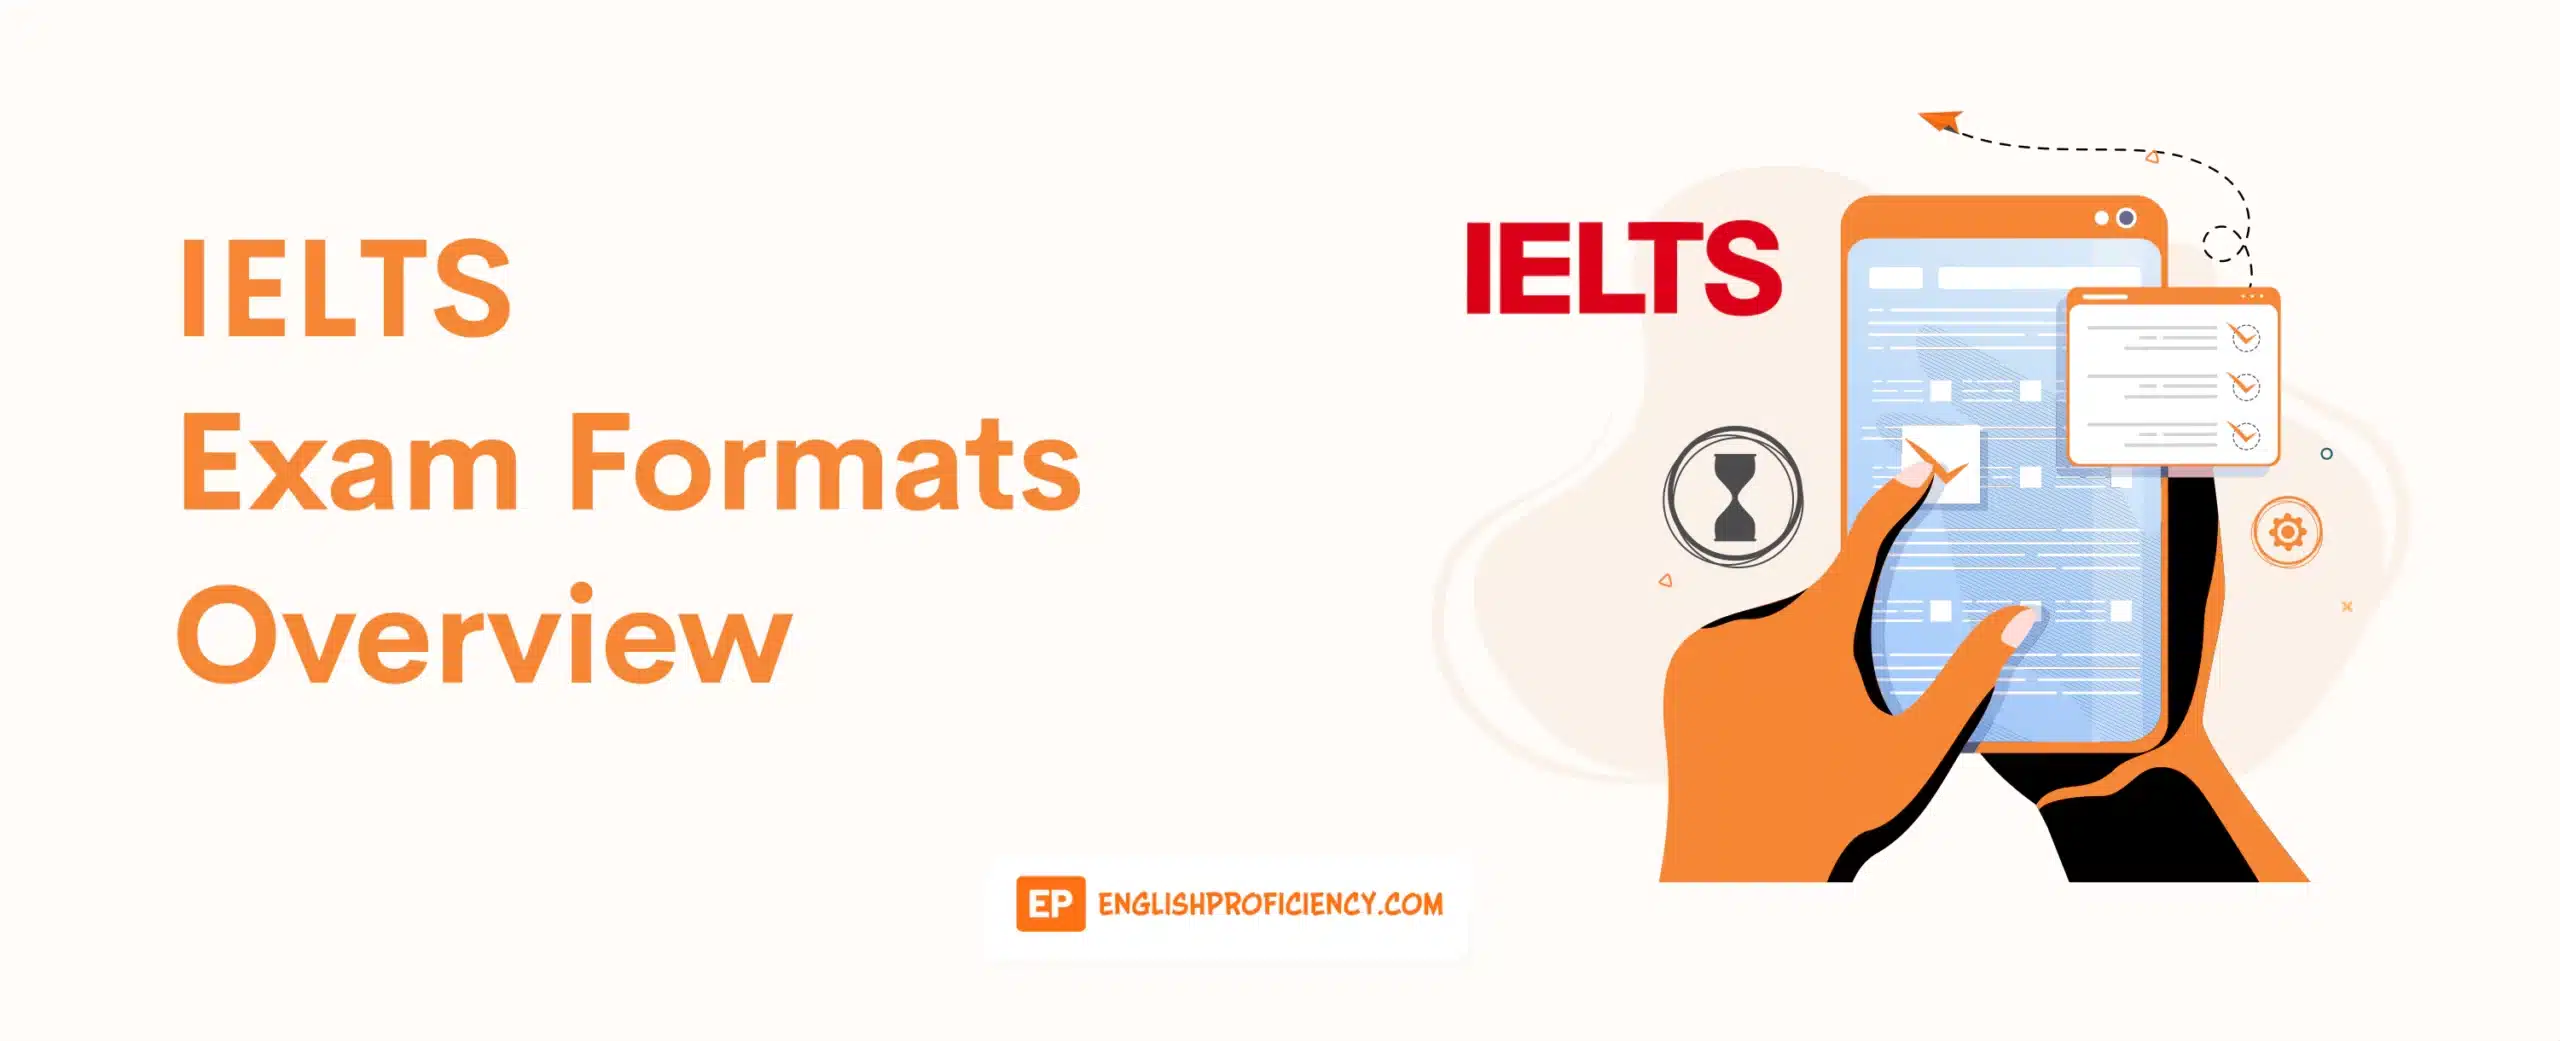 IELTS Exam Formats Overview